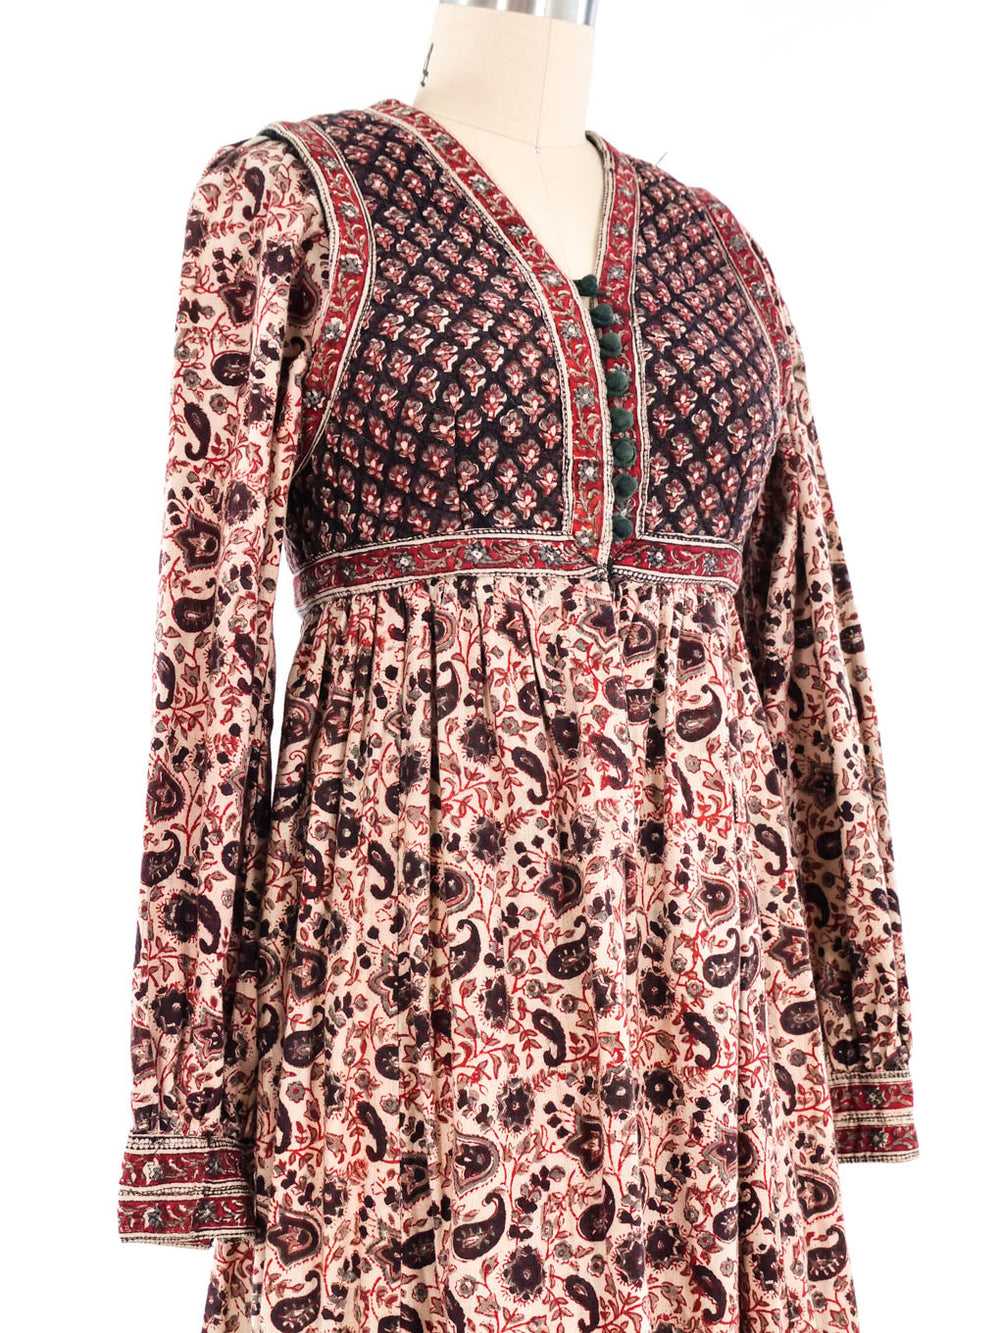 Block Printed Cotton Indian Dress - image 2